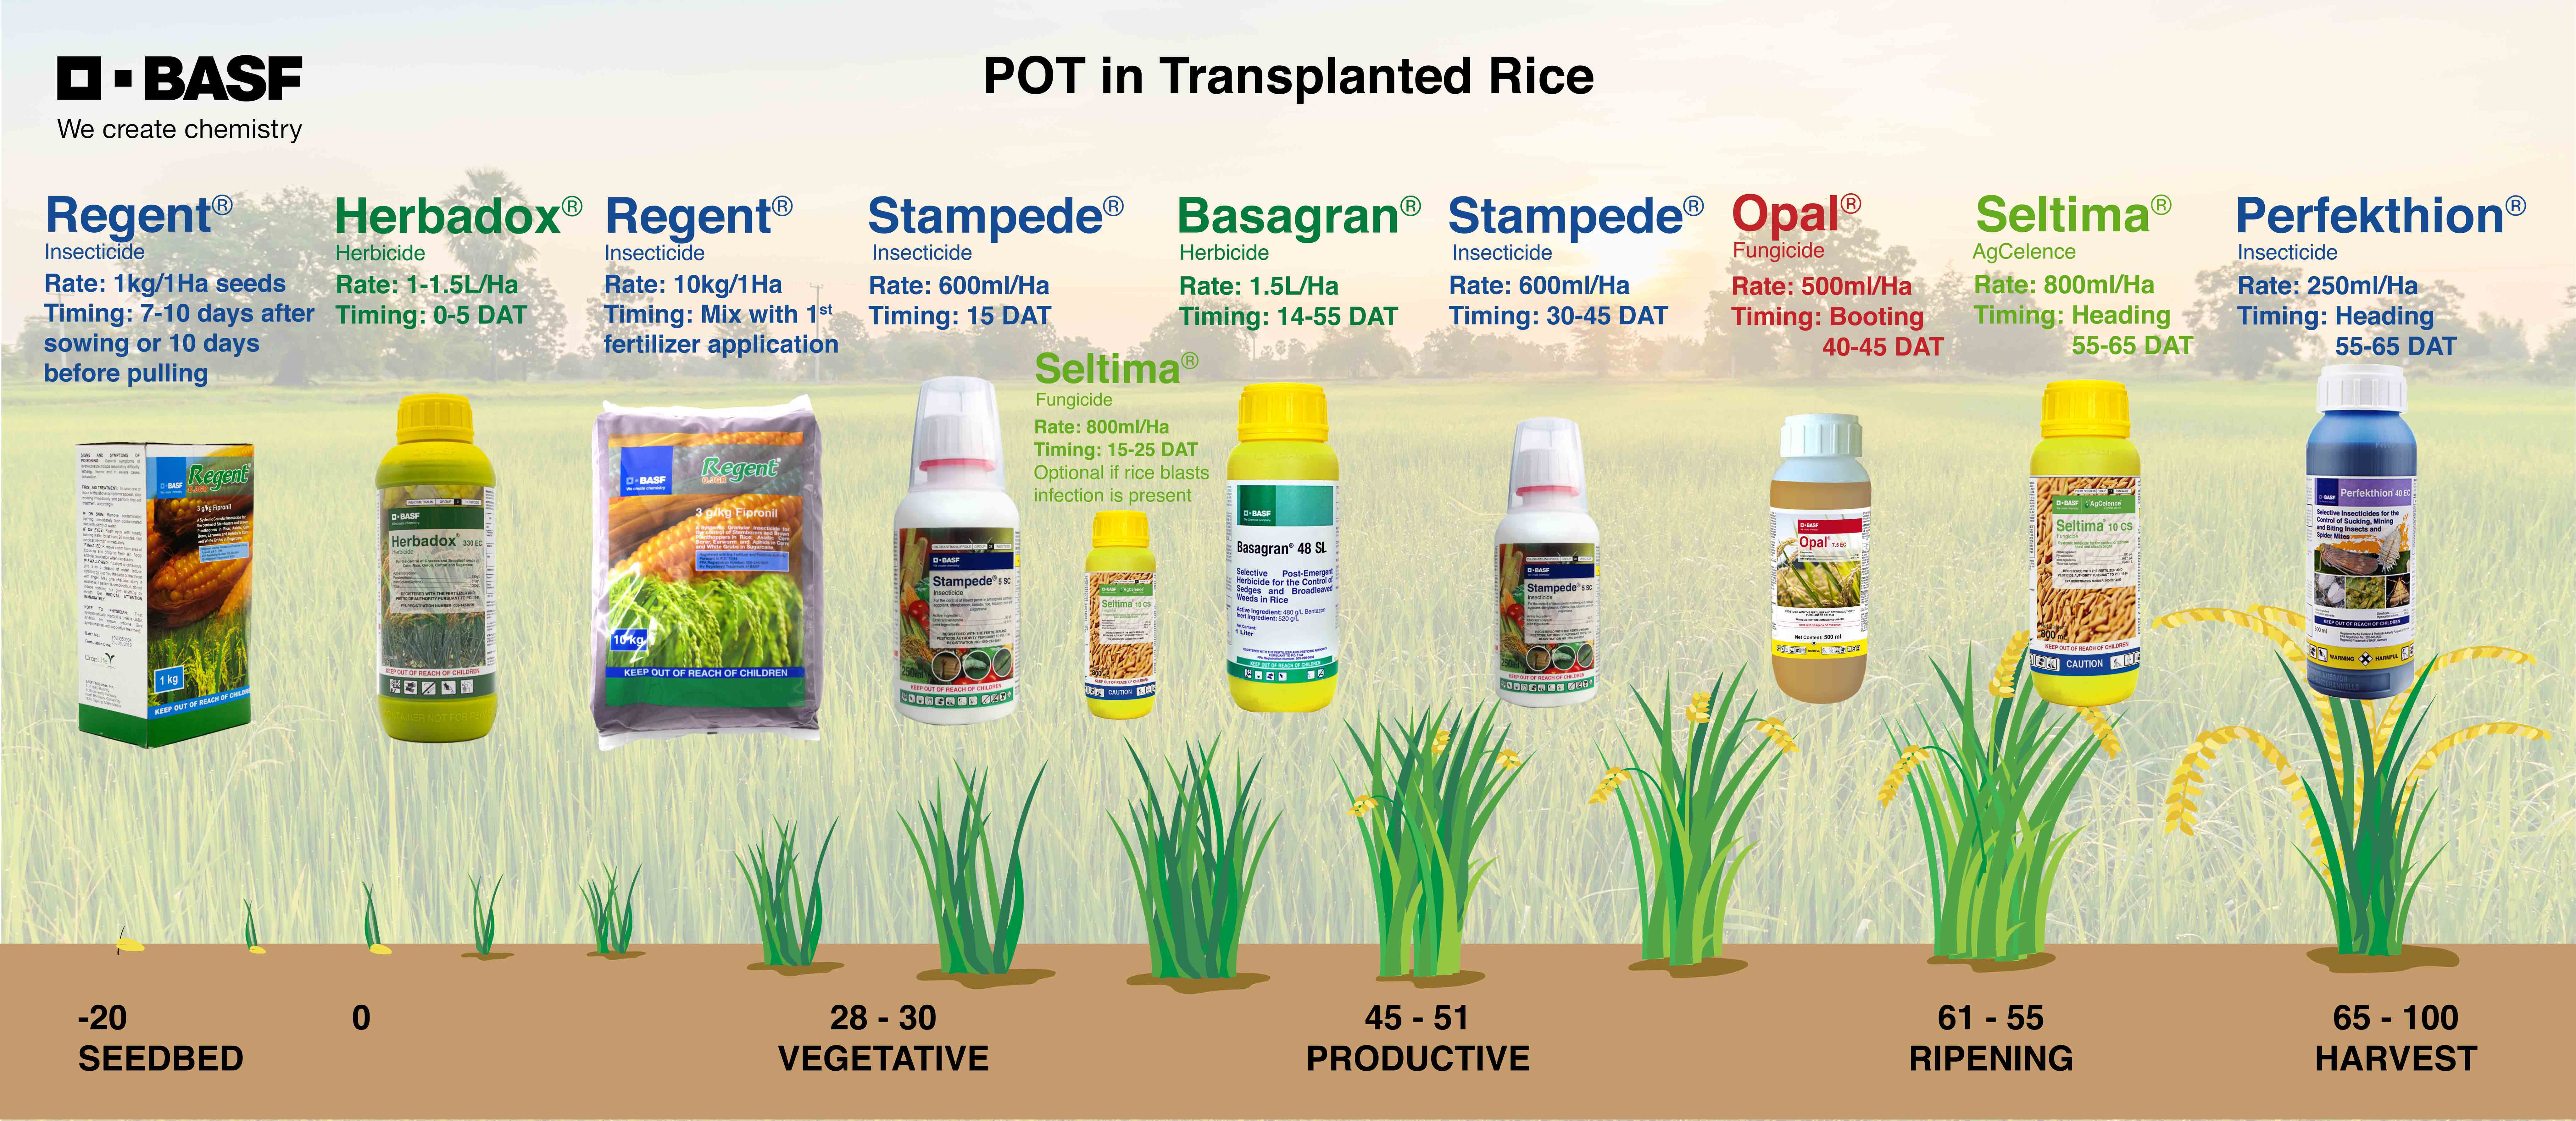 BASF-POT_Transplanted-Rice